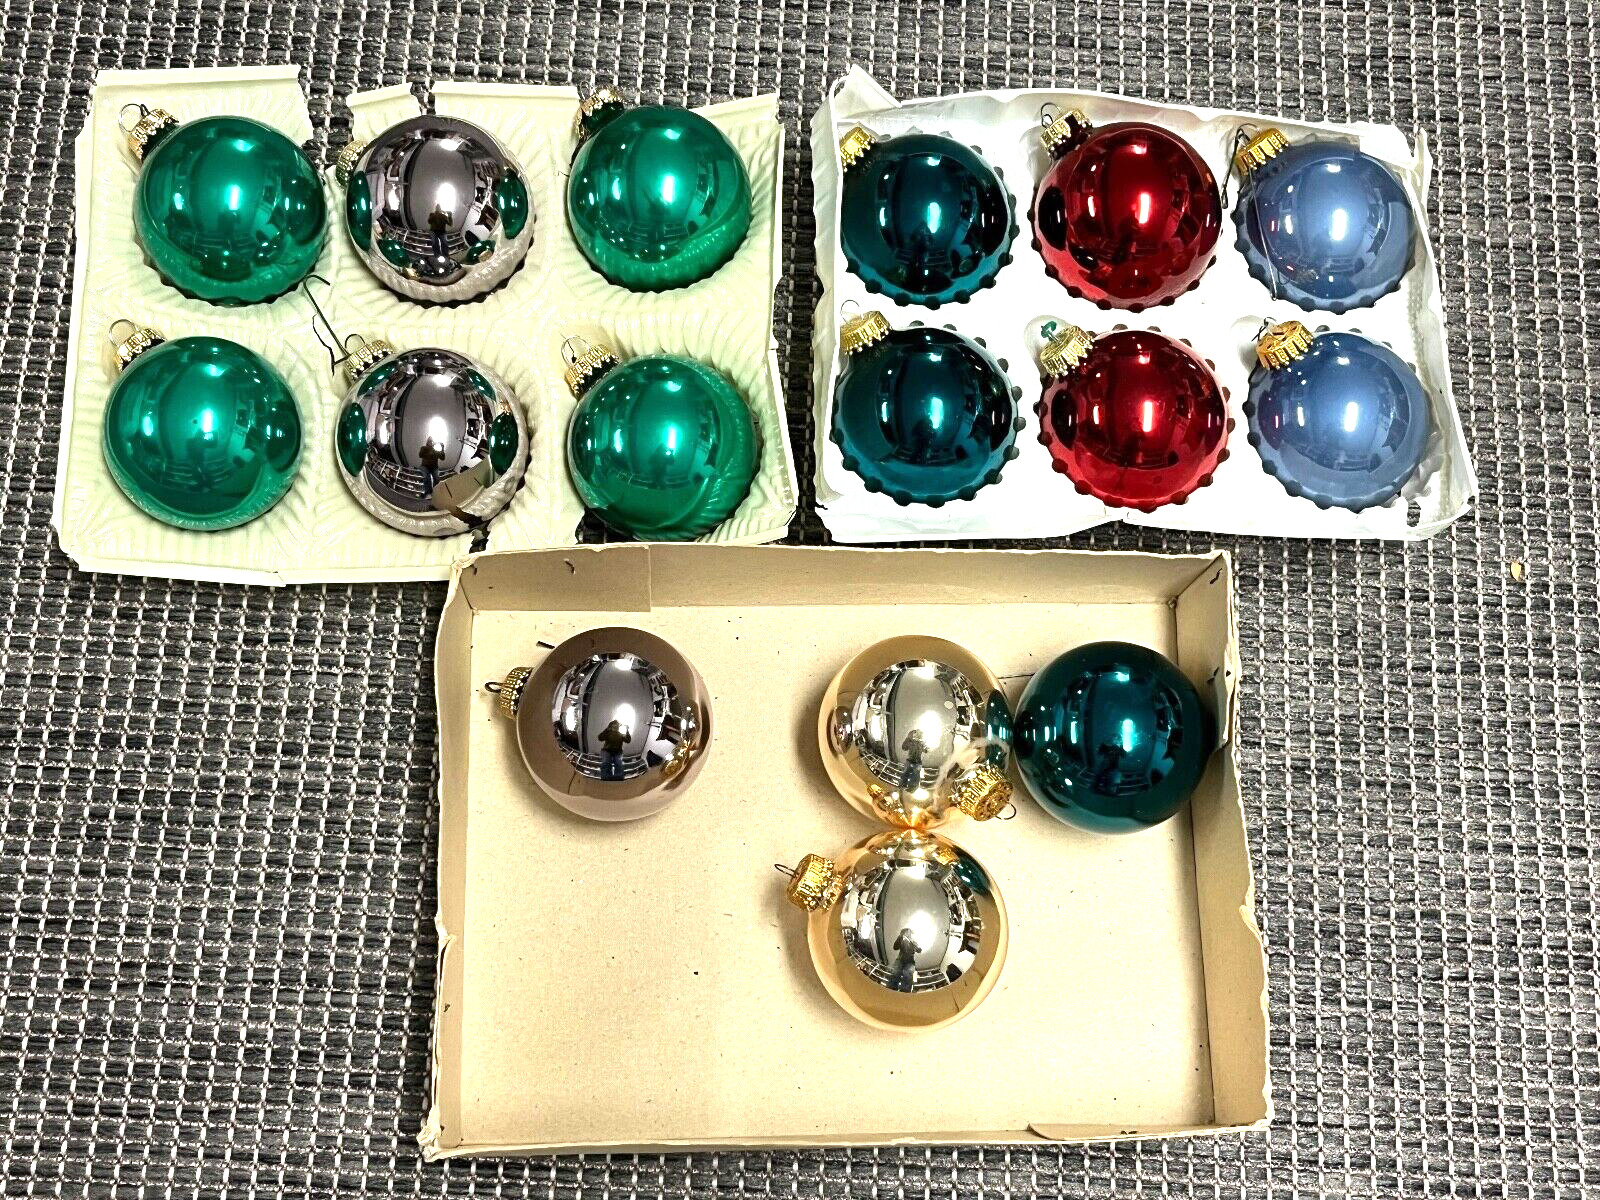 16PC Lot of  Vintage Christmas Ornament Bulbs Balls - 6 Colors, Lacy Gold Caps